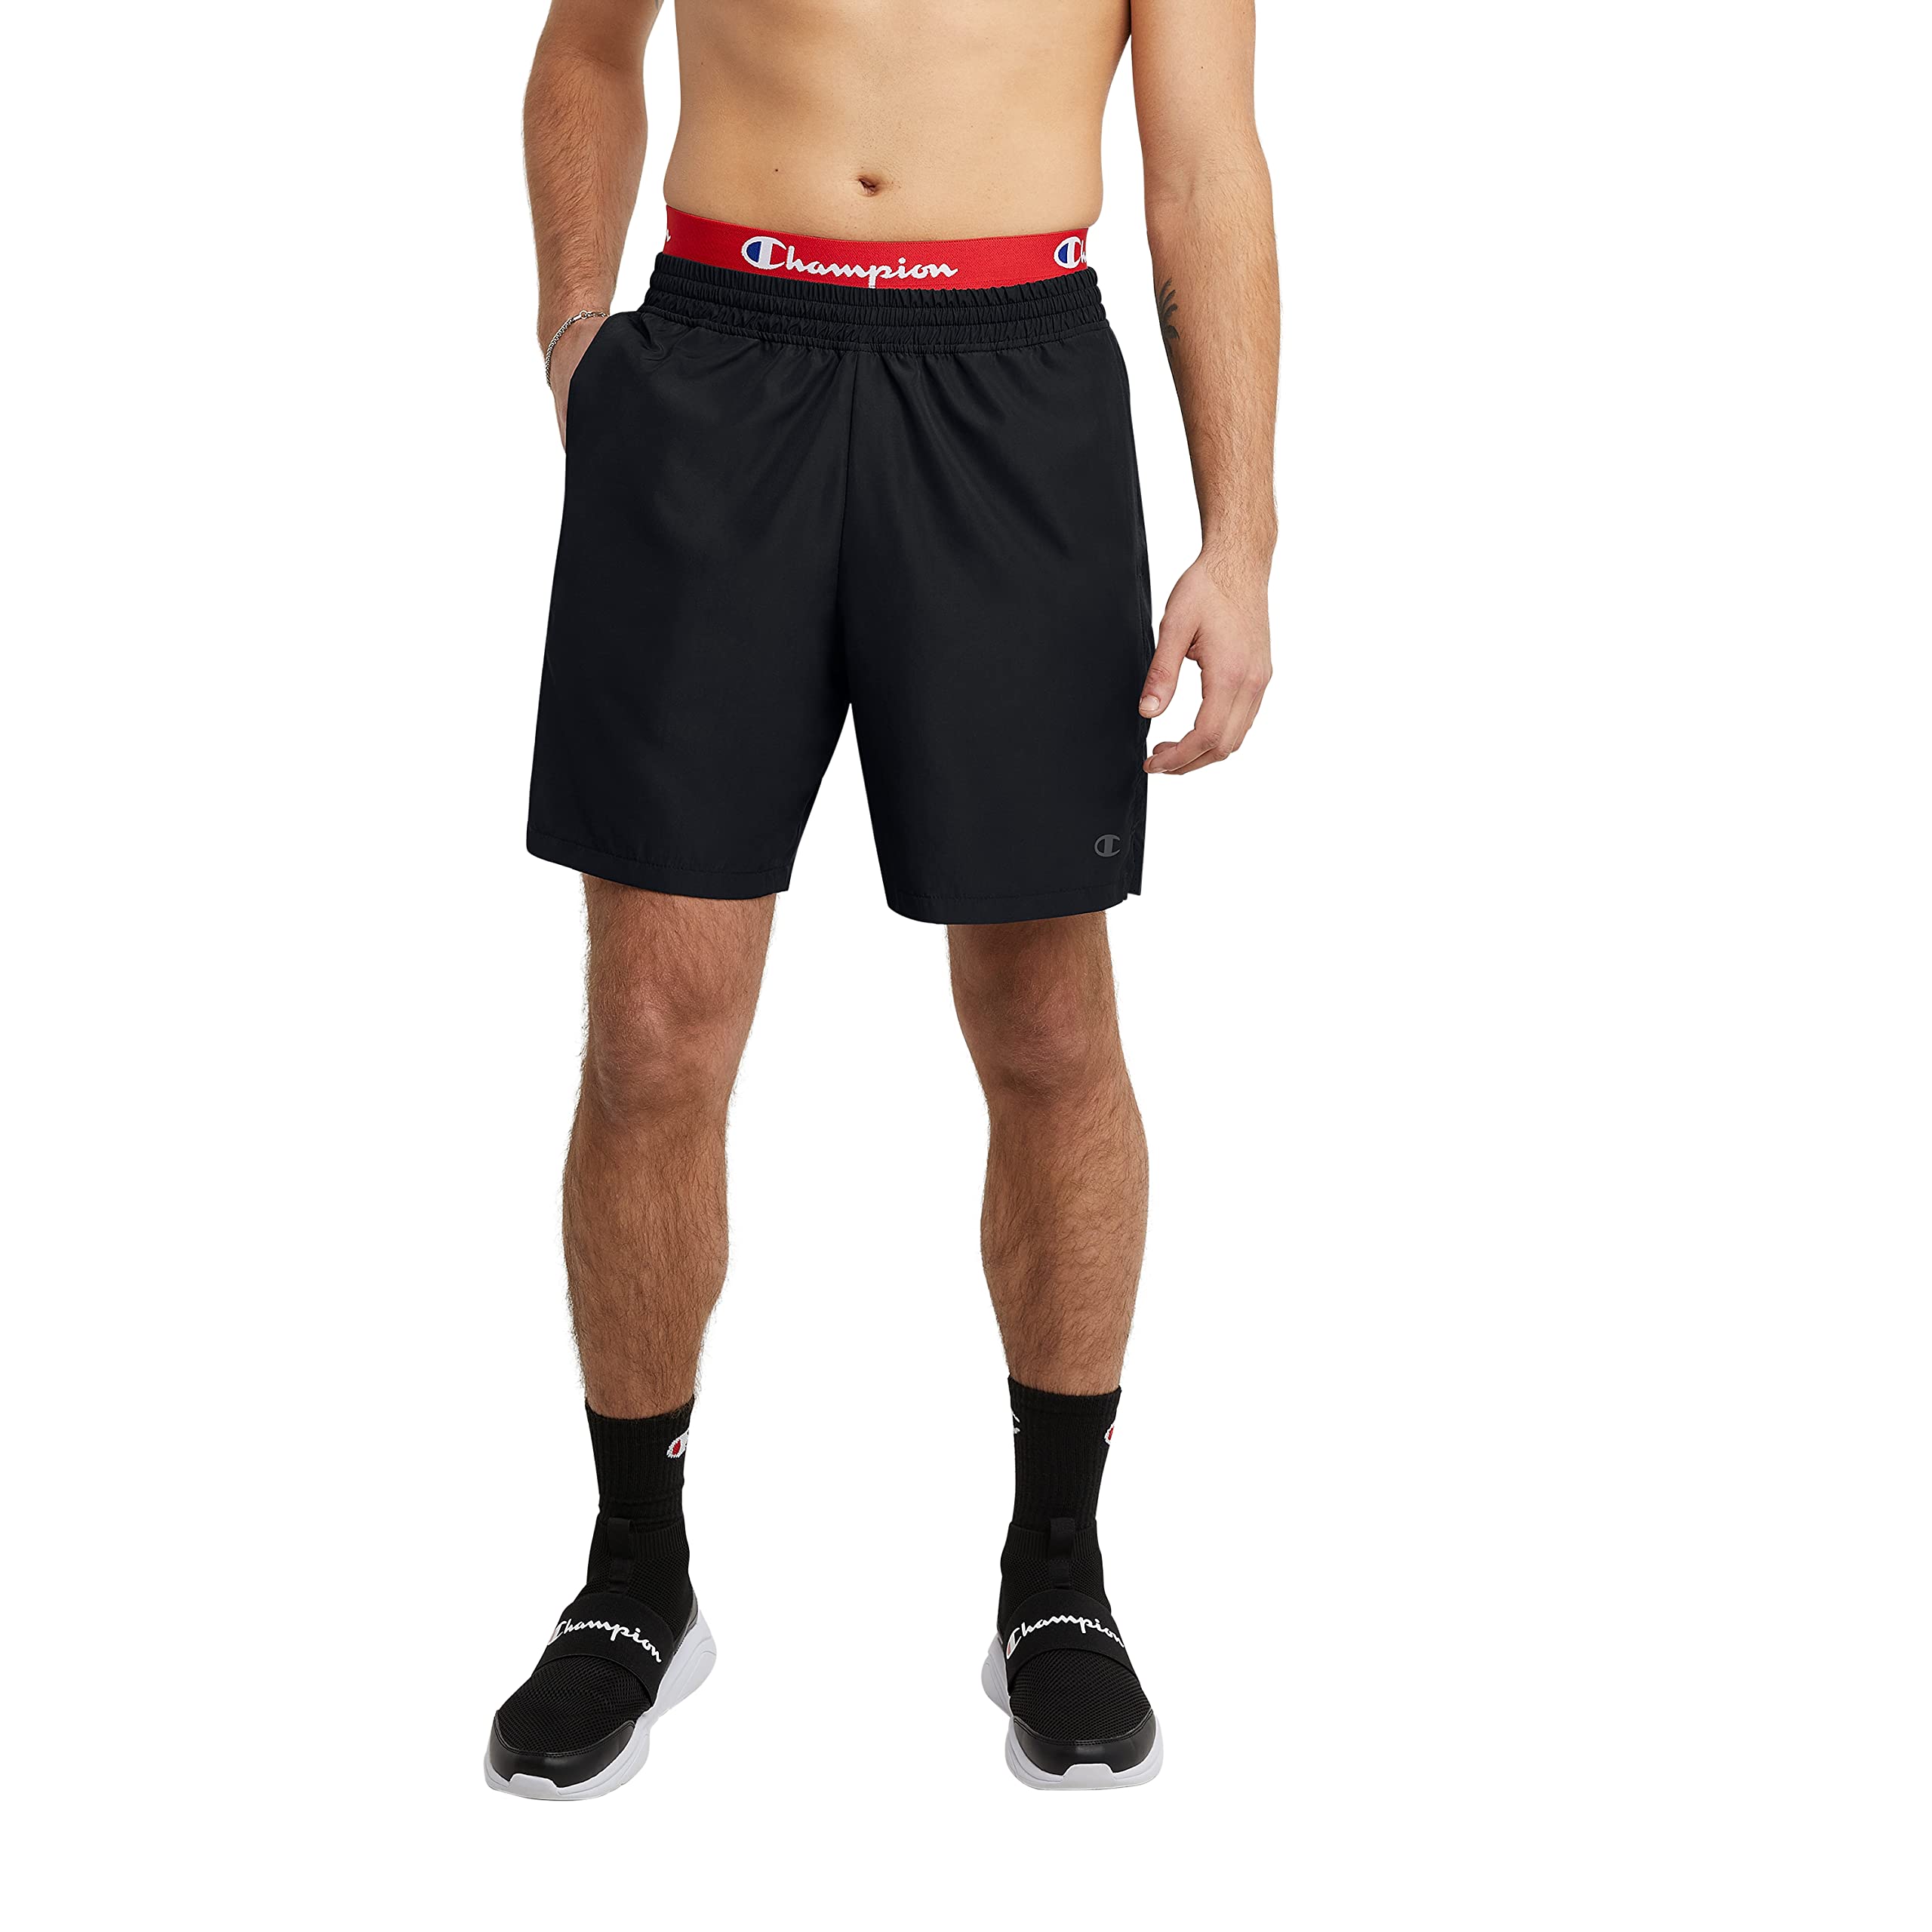 Champion Men's Athletic Shorts, Unlined Shorts, Lightweight Mid-Length Basketball Shorts, 7